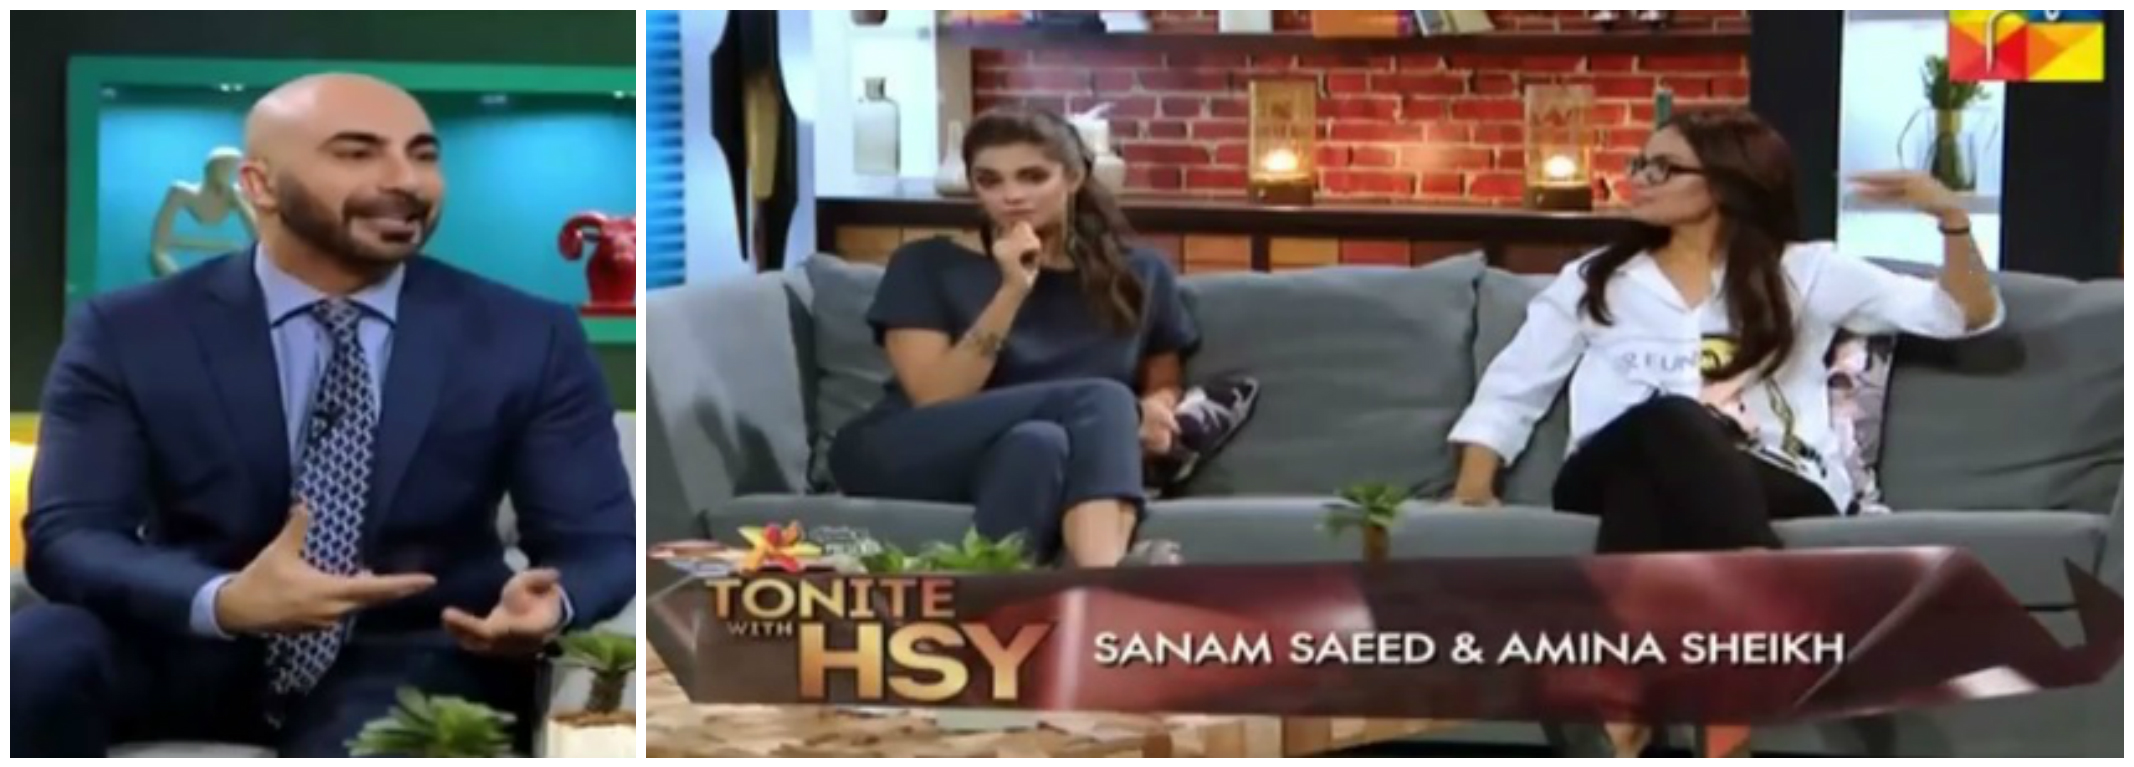 Tonite With HSY Season 4 Review - Sanam Saeed and Aamina Sheikh